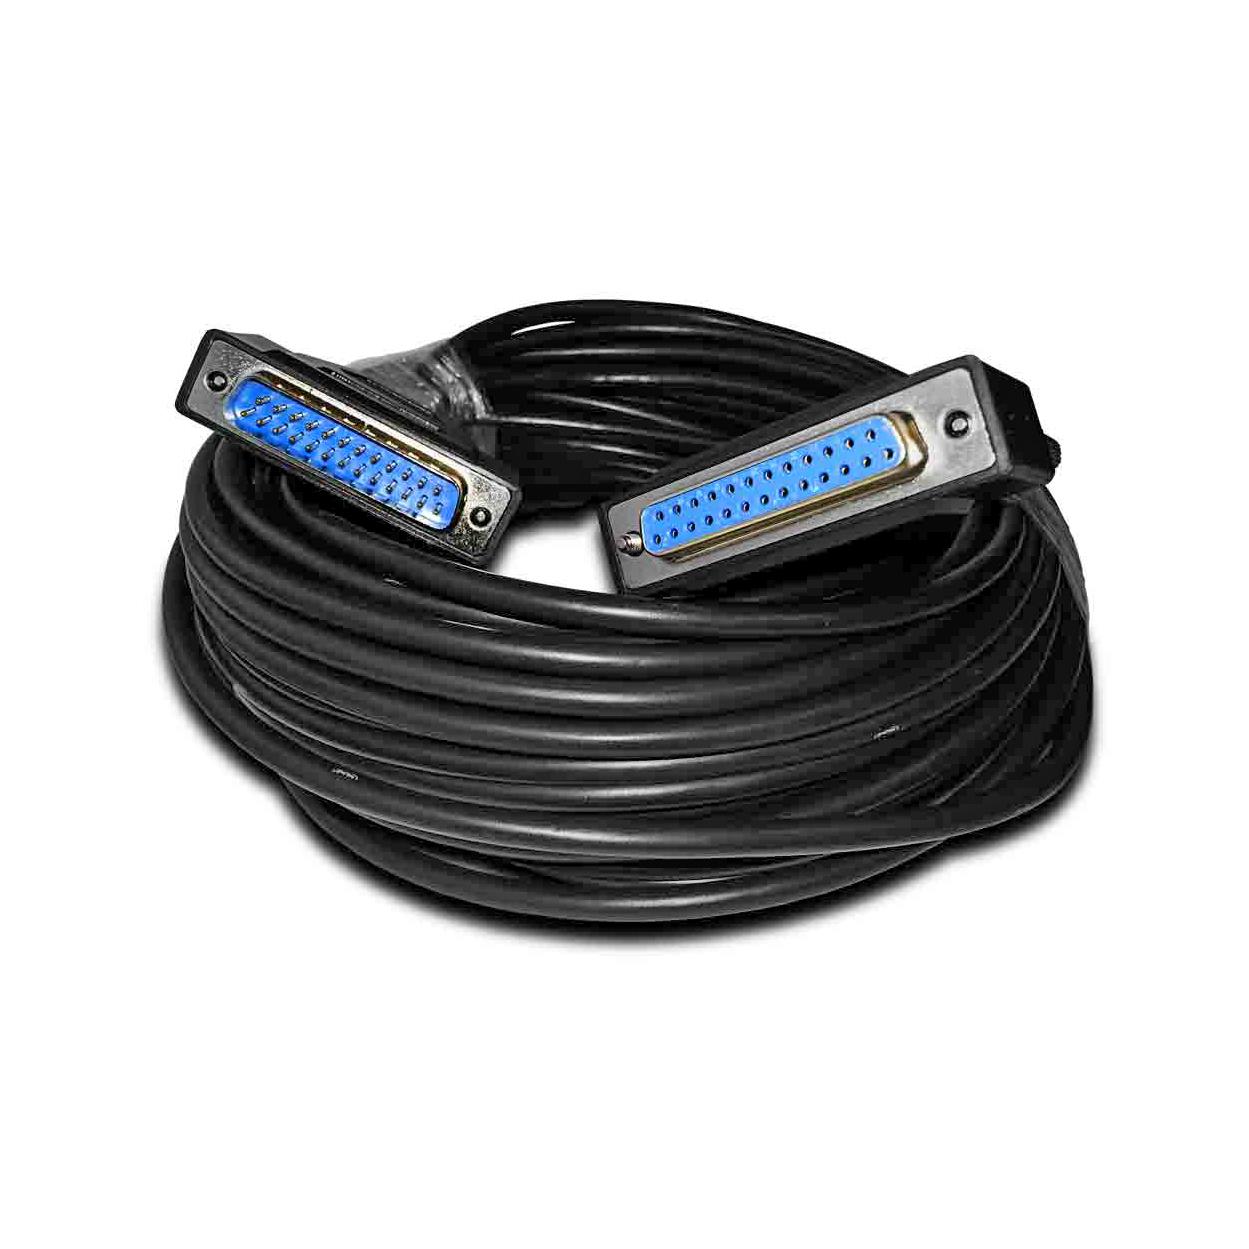 LASERWORLD ILDA Cable 20m - EXT-20B